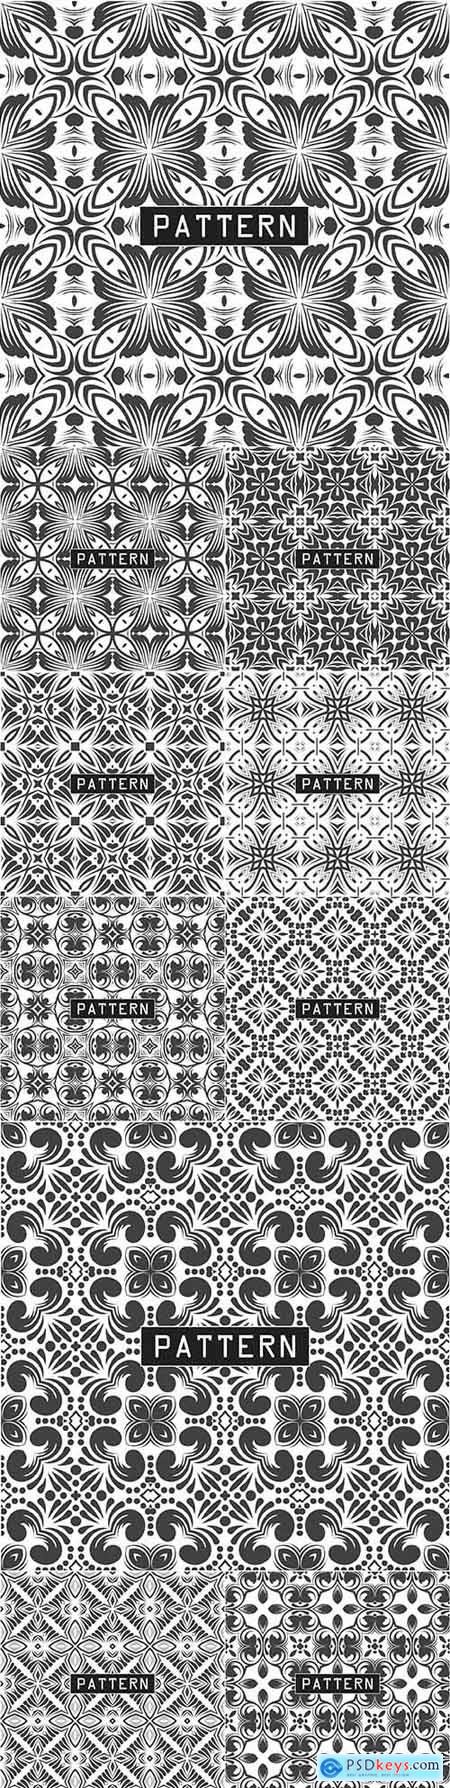 Decorative black and white seamless design pattern